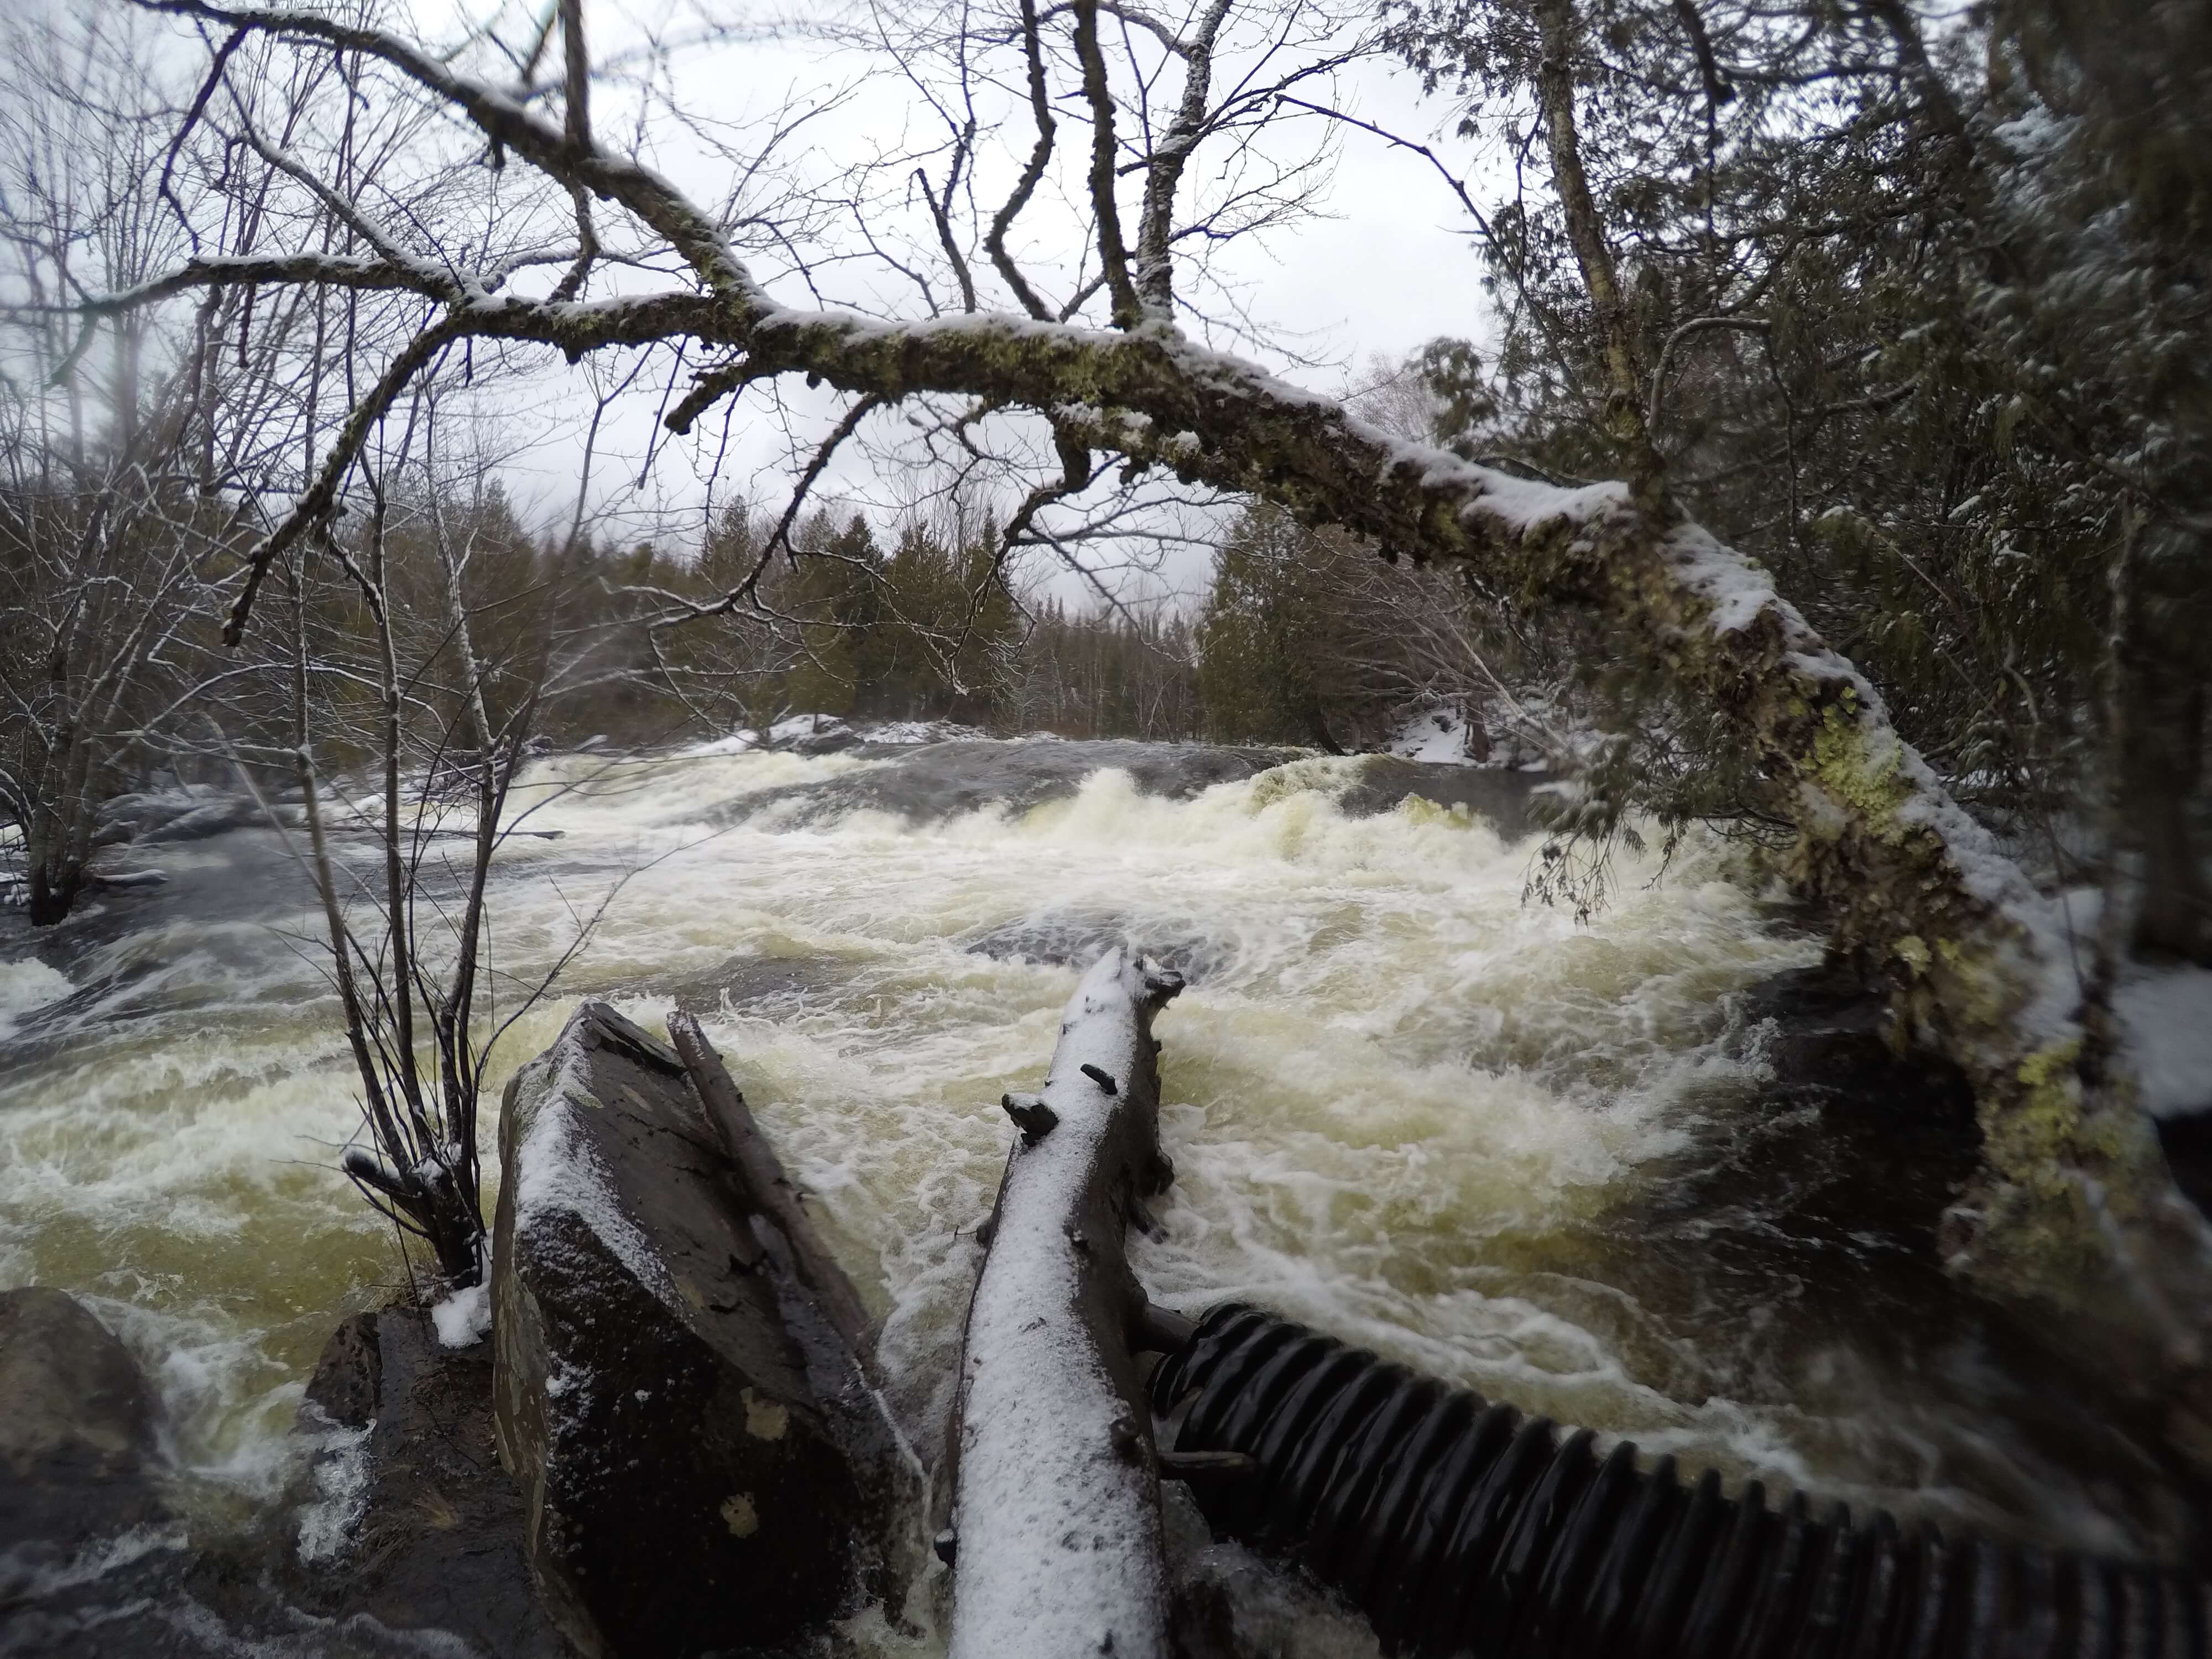 Teft Pond Falls on the Saranac River.